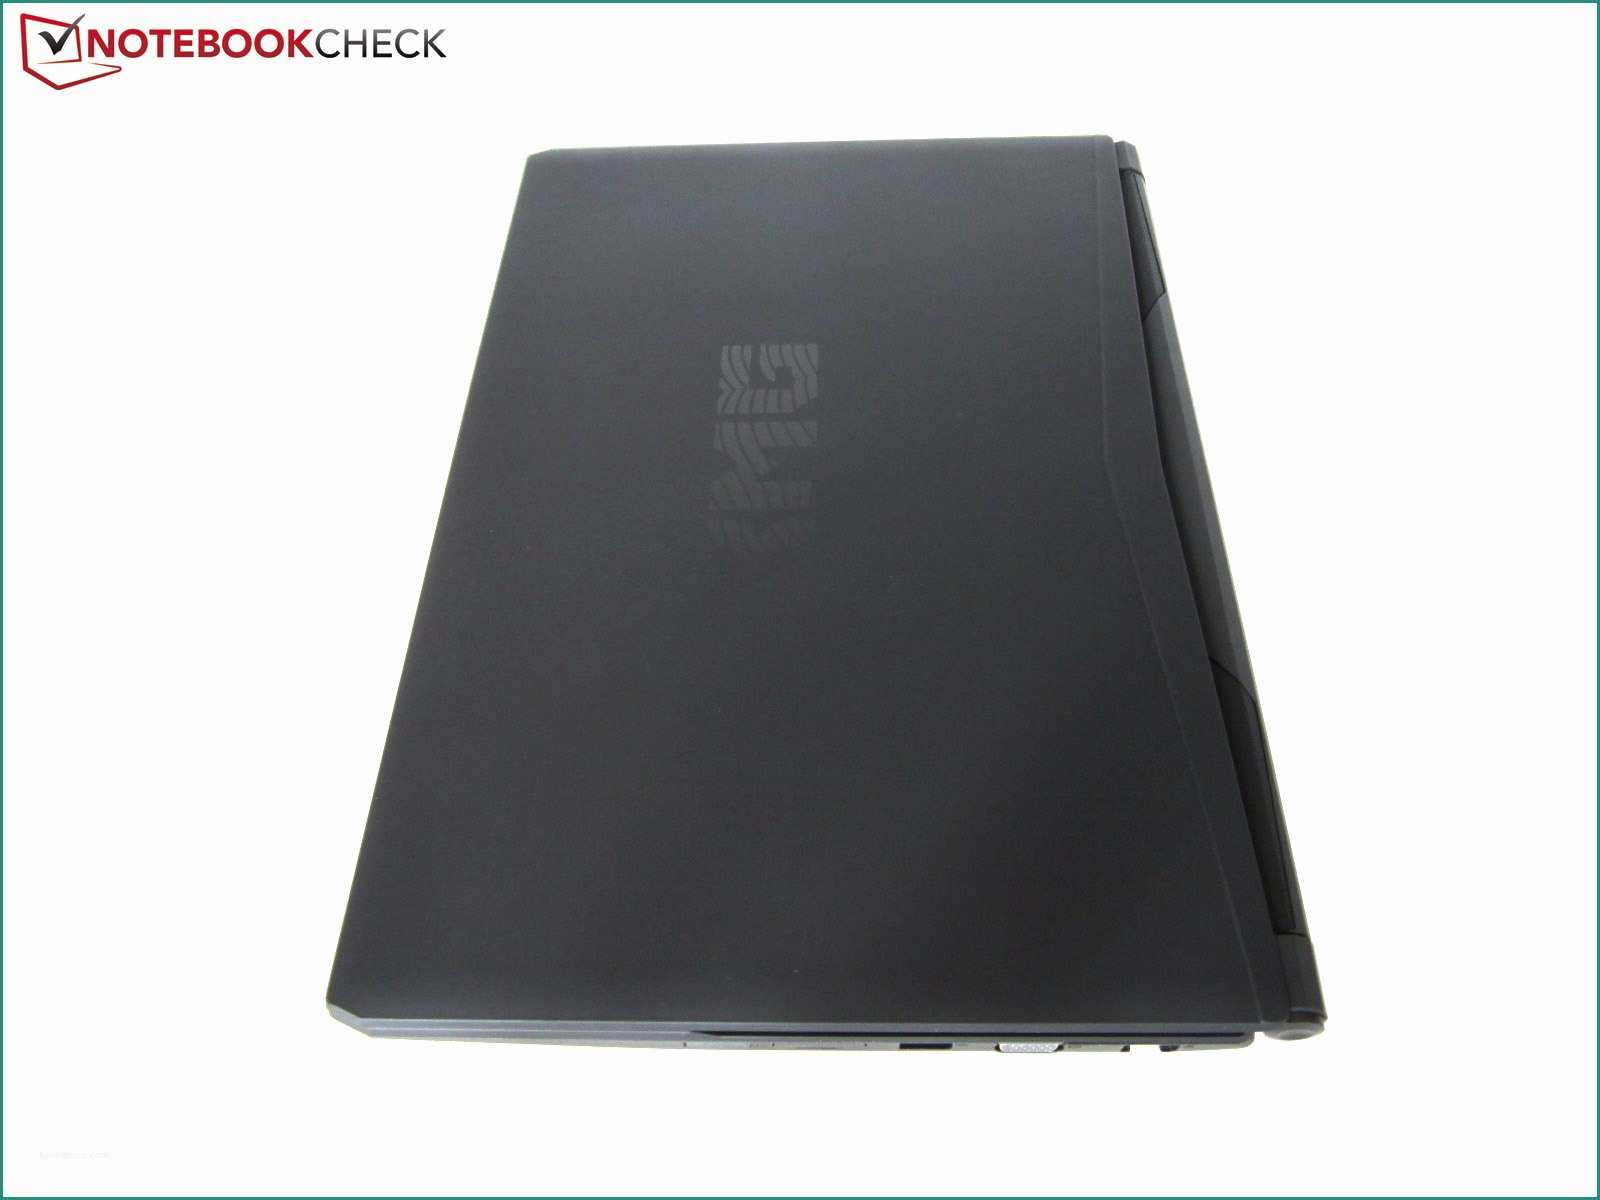 Nexus X Recensione E Schenker Xmg A516 Clevo N150rf Notebook Review Notebookcheck